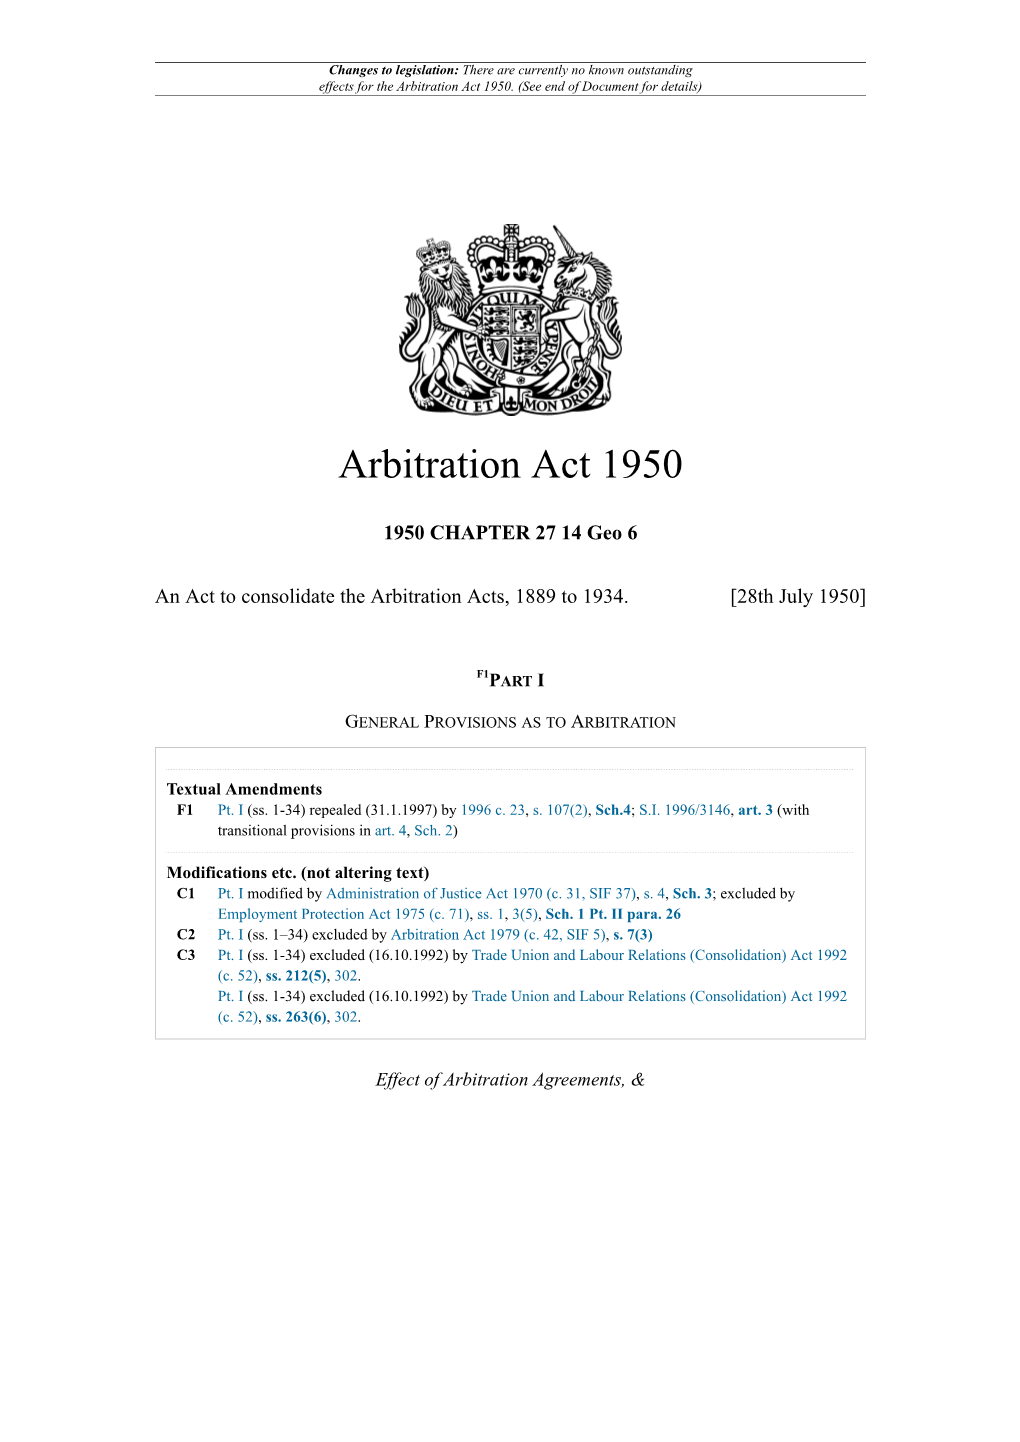 Arbitration Act 1950